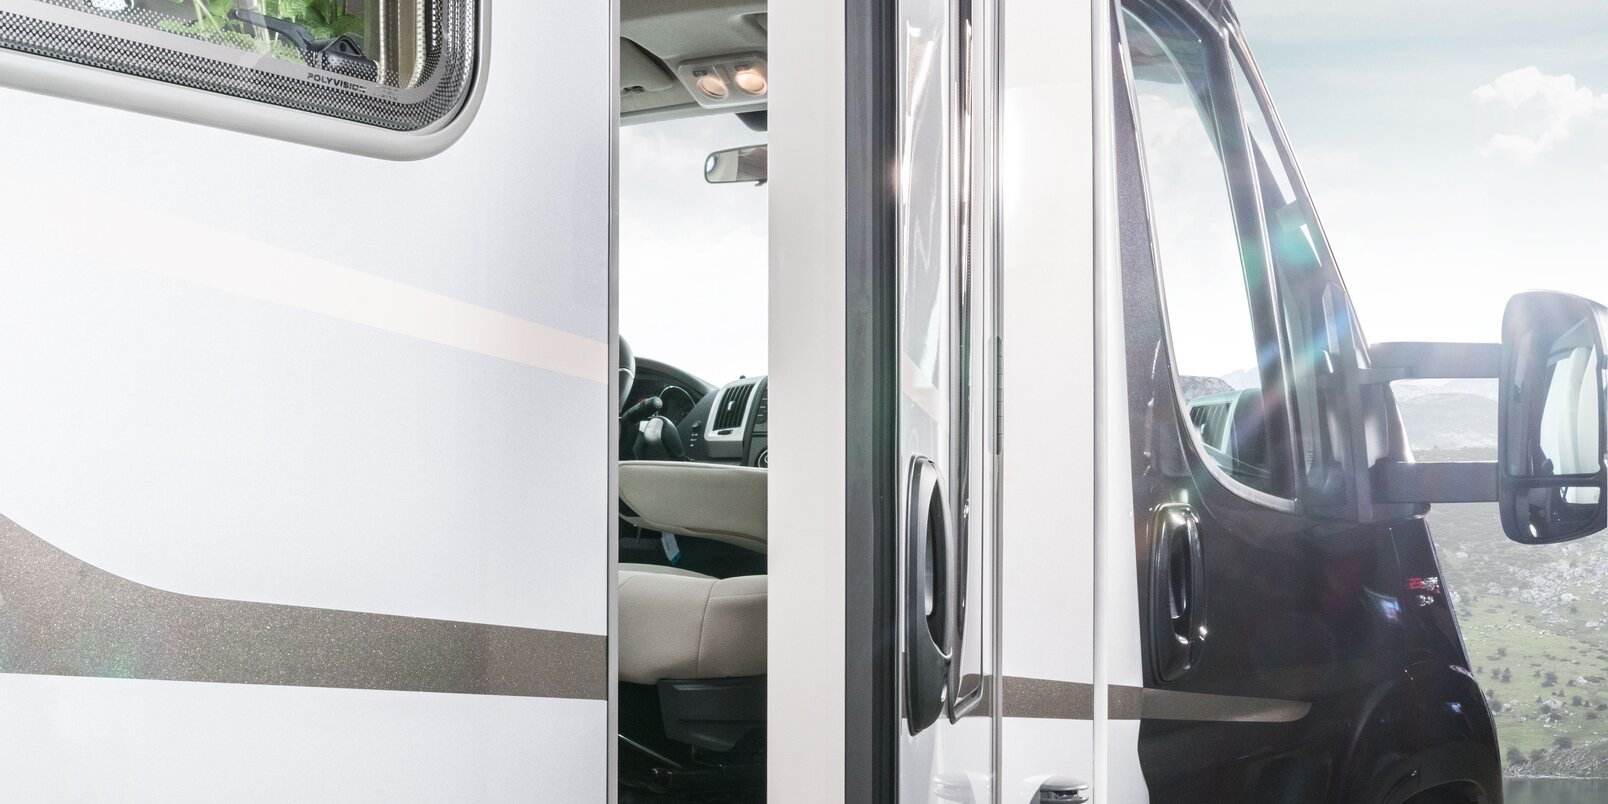 Porta d’ingresso semi-aperta con pattumiera integrata nell’autocaravan HYMER Exsis-t